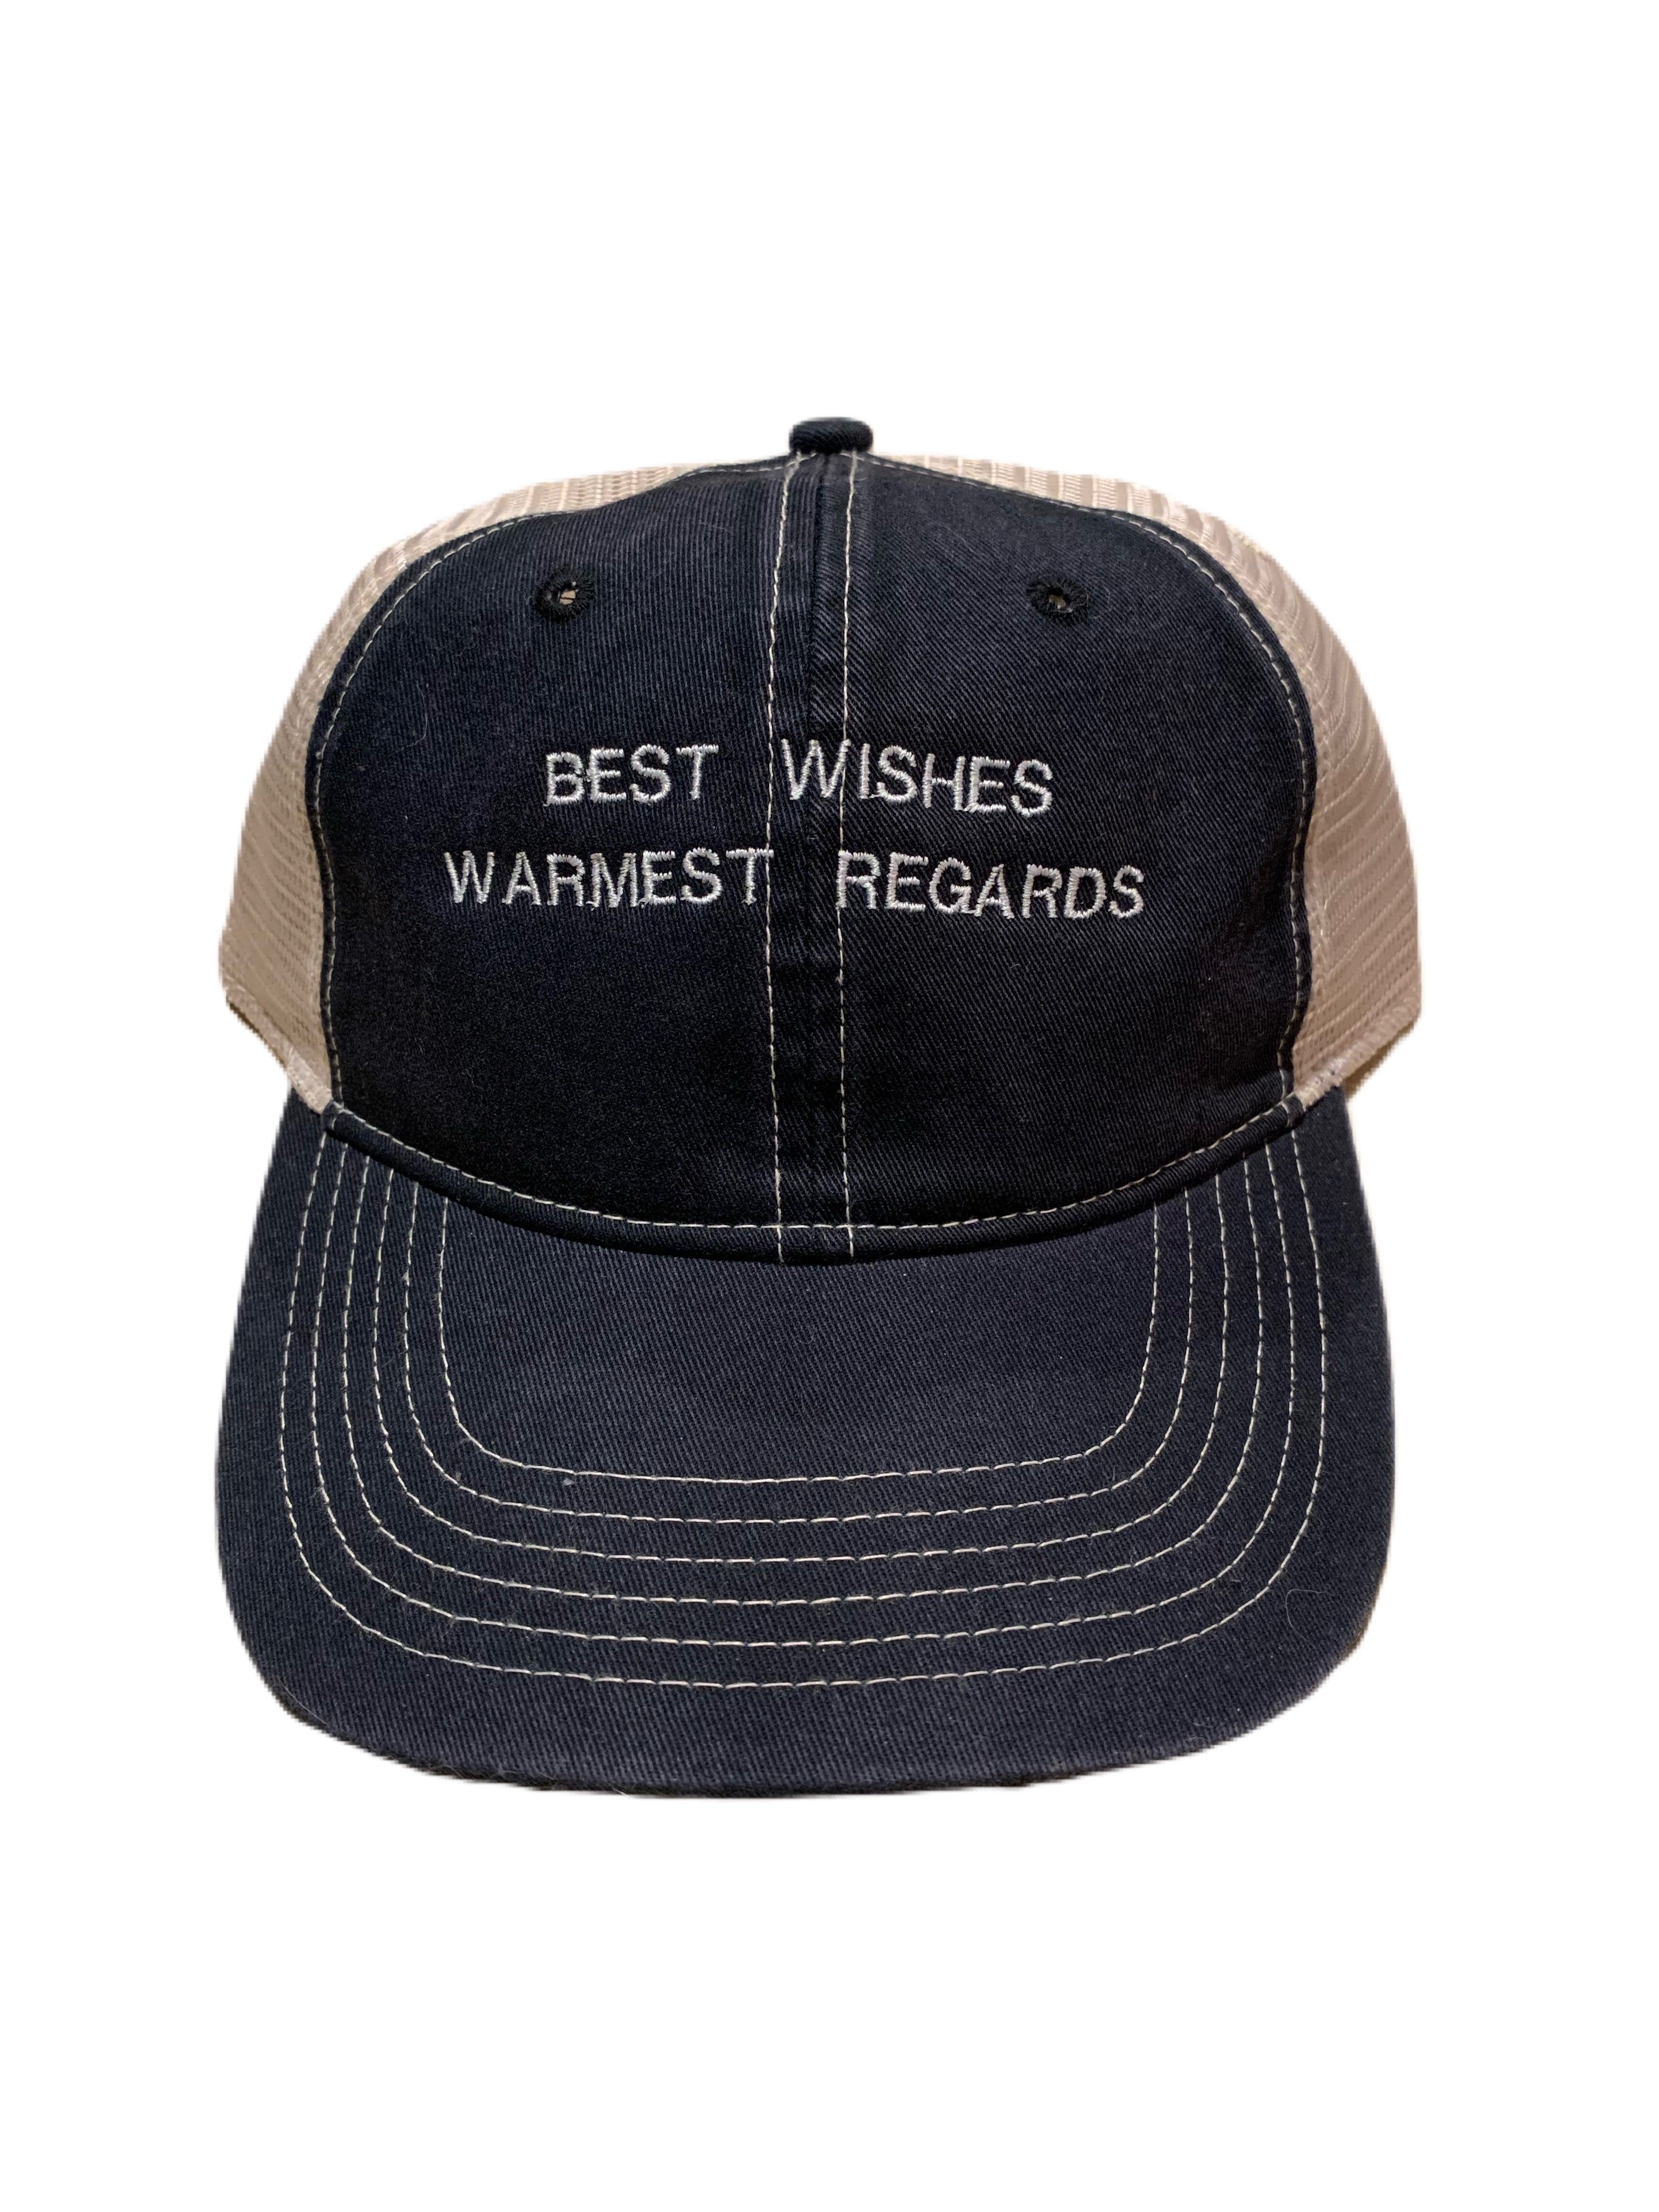 Best Wishes Warmest Regards Baseball Hat